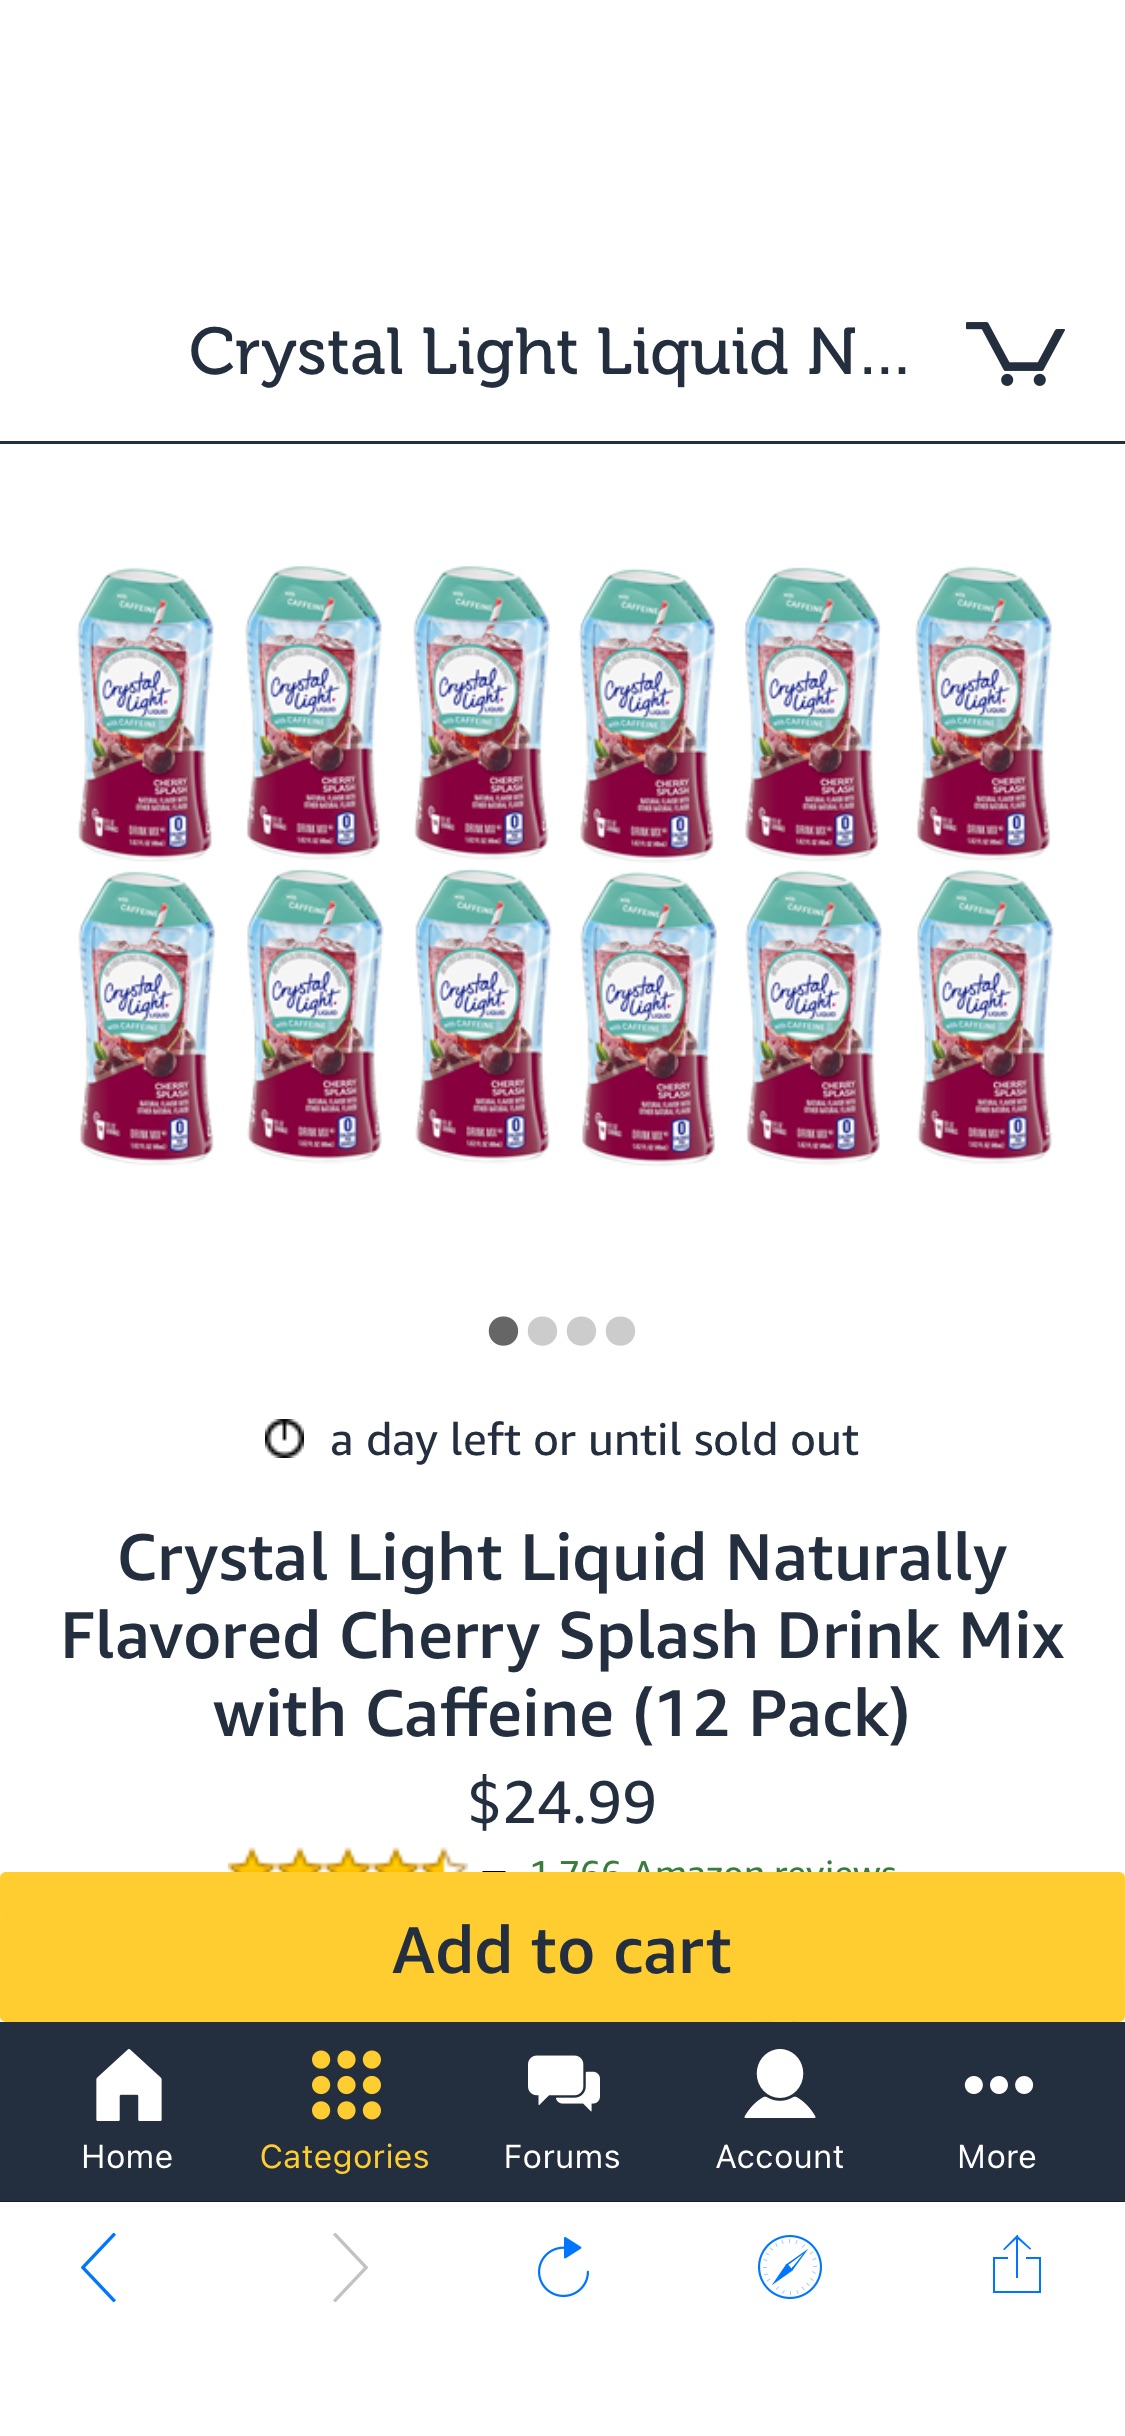 Crystal Light Liquid Naturally Flavored Cherry Splash Drink Mix with Caffeine (12 Pack)促销